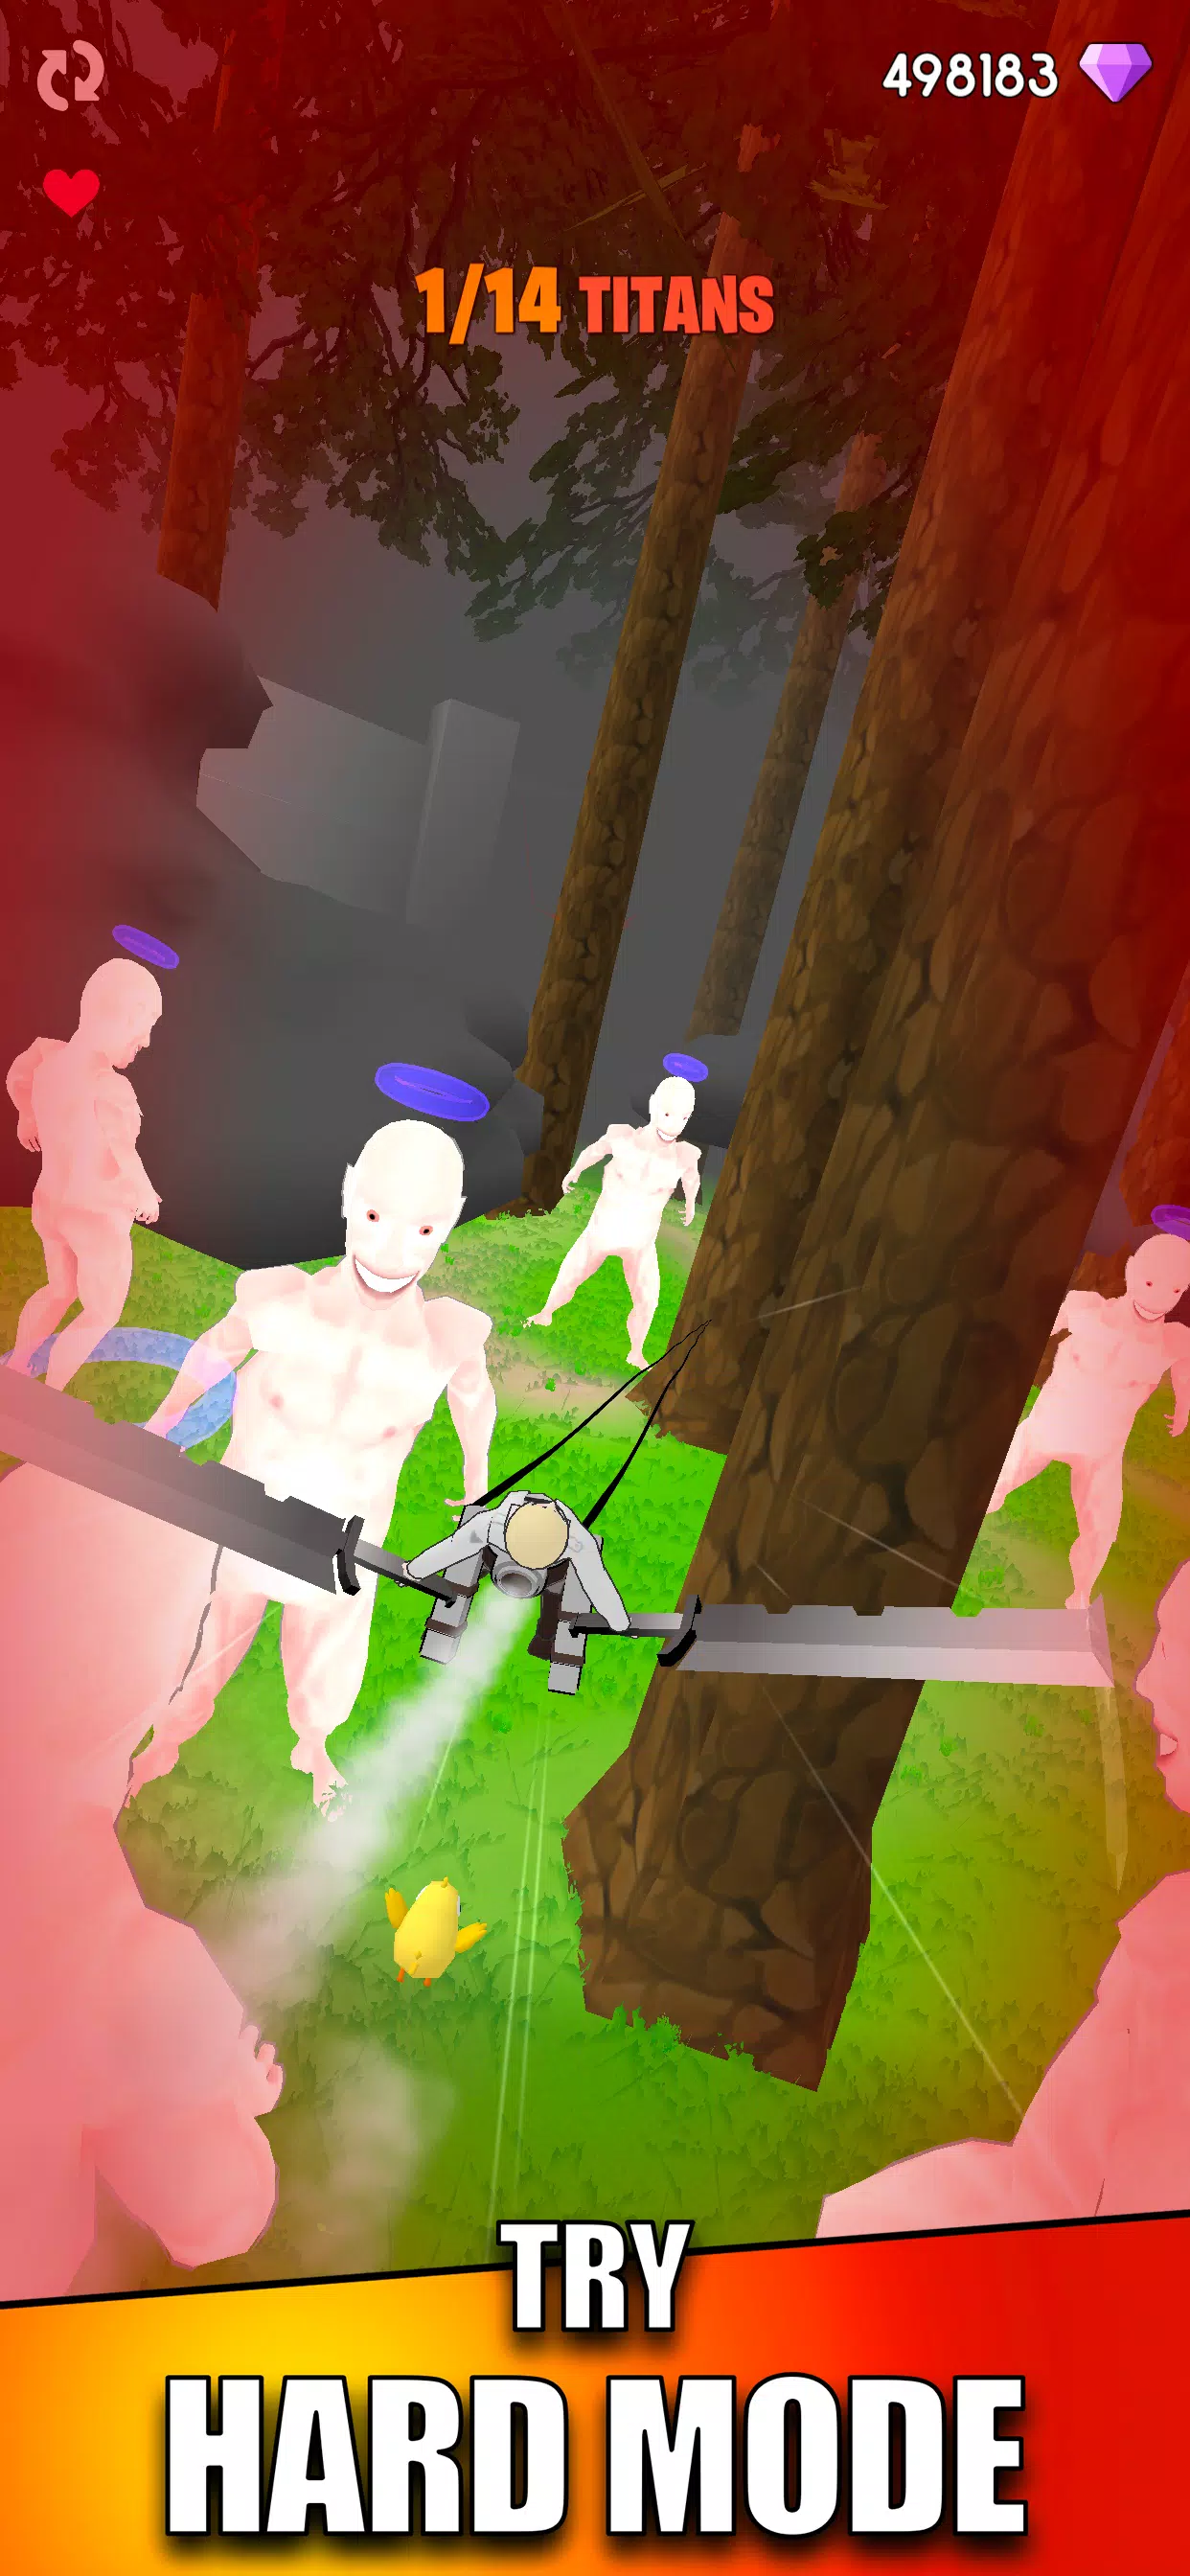 Titans Slayer: Fun 3D Action Game Ver. 0.810 MOD APK, UNLIMITED UNLOCKED  ITEMS